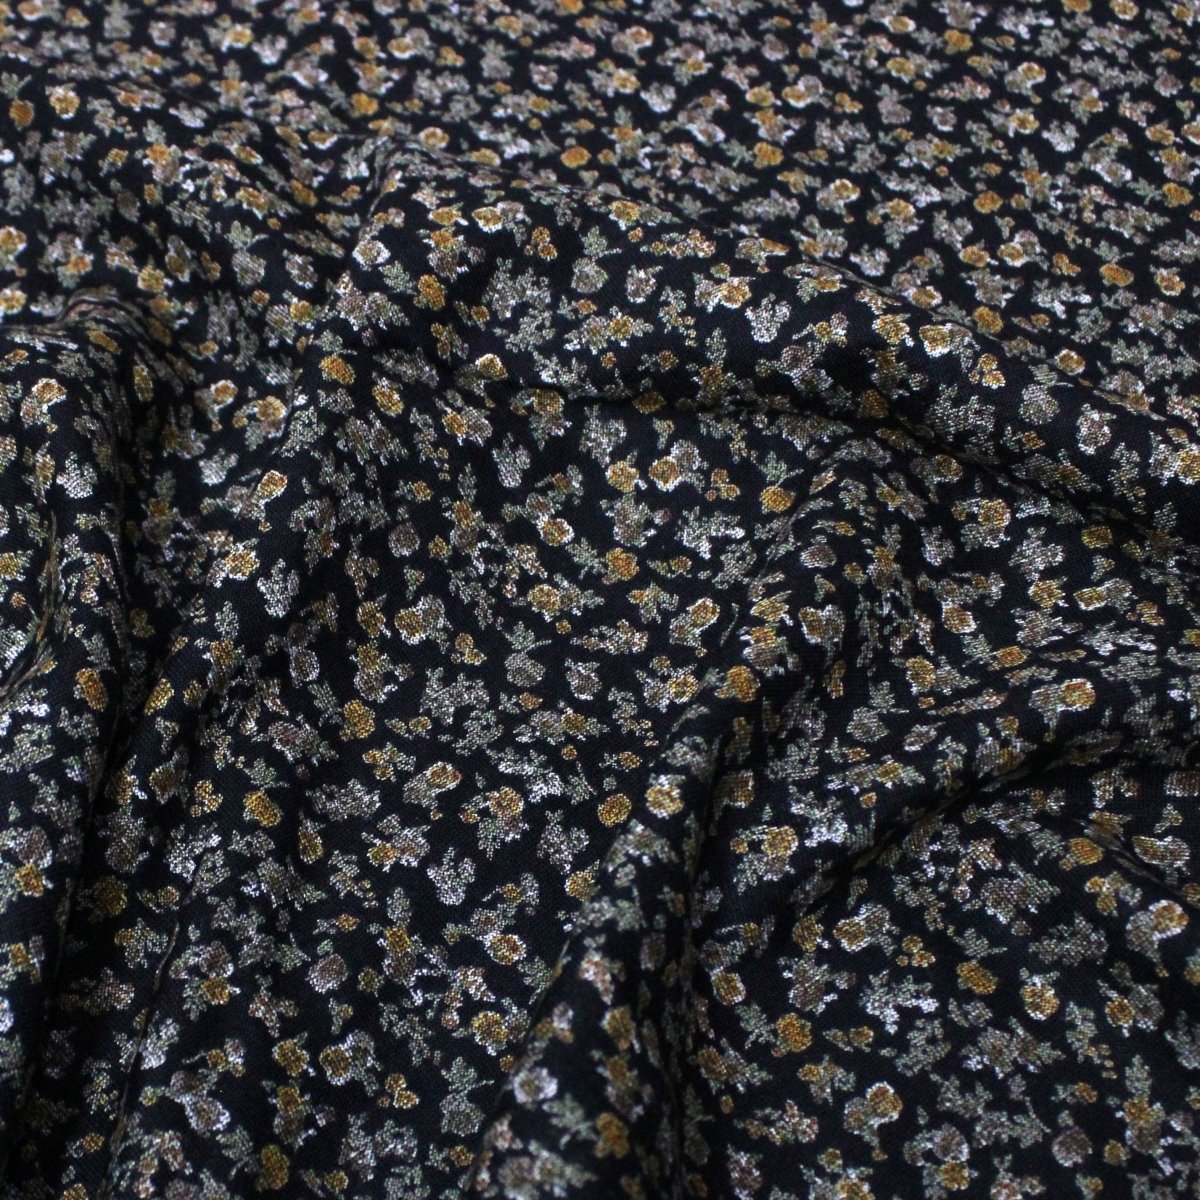 3 Metres Alpine Cashmere Effect Fabric- 45" Wide (Mustard Mini Floral) - Pound A Metre